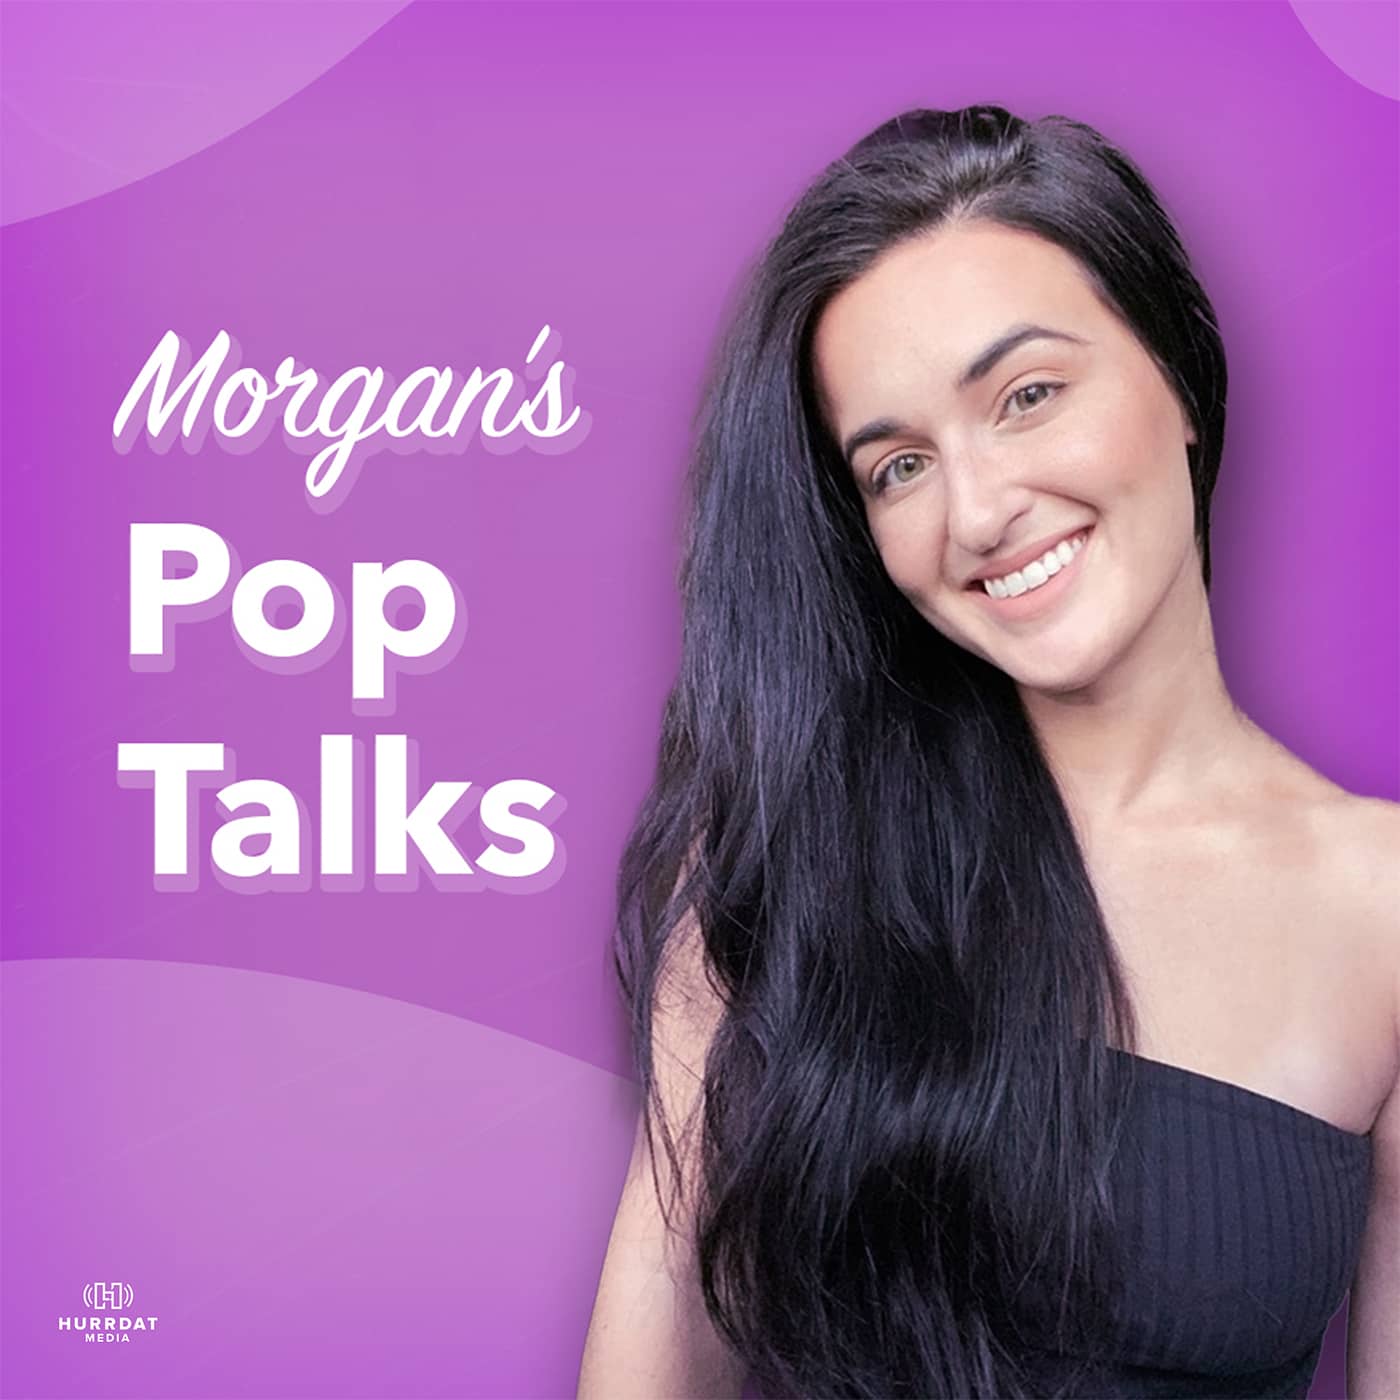 Morgan's Pop Talks